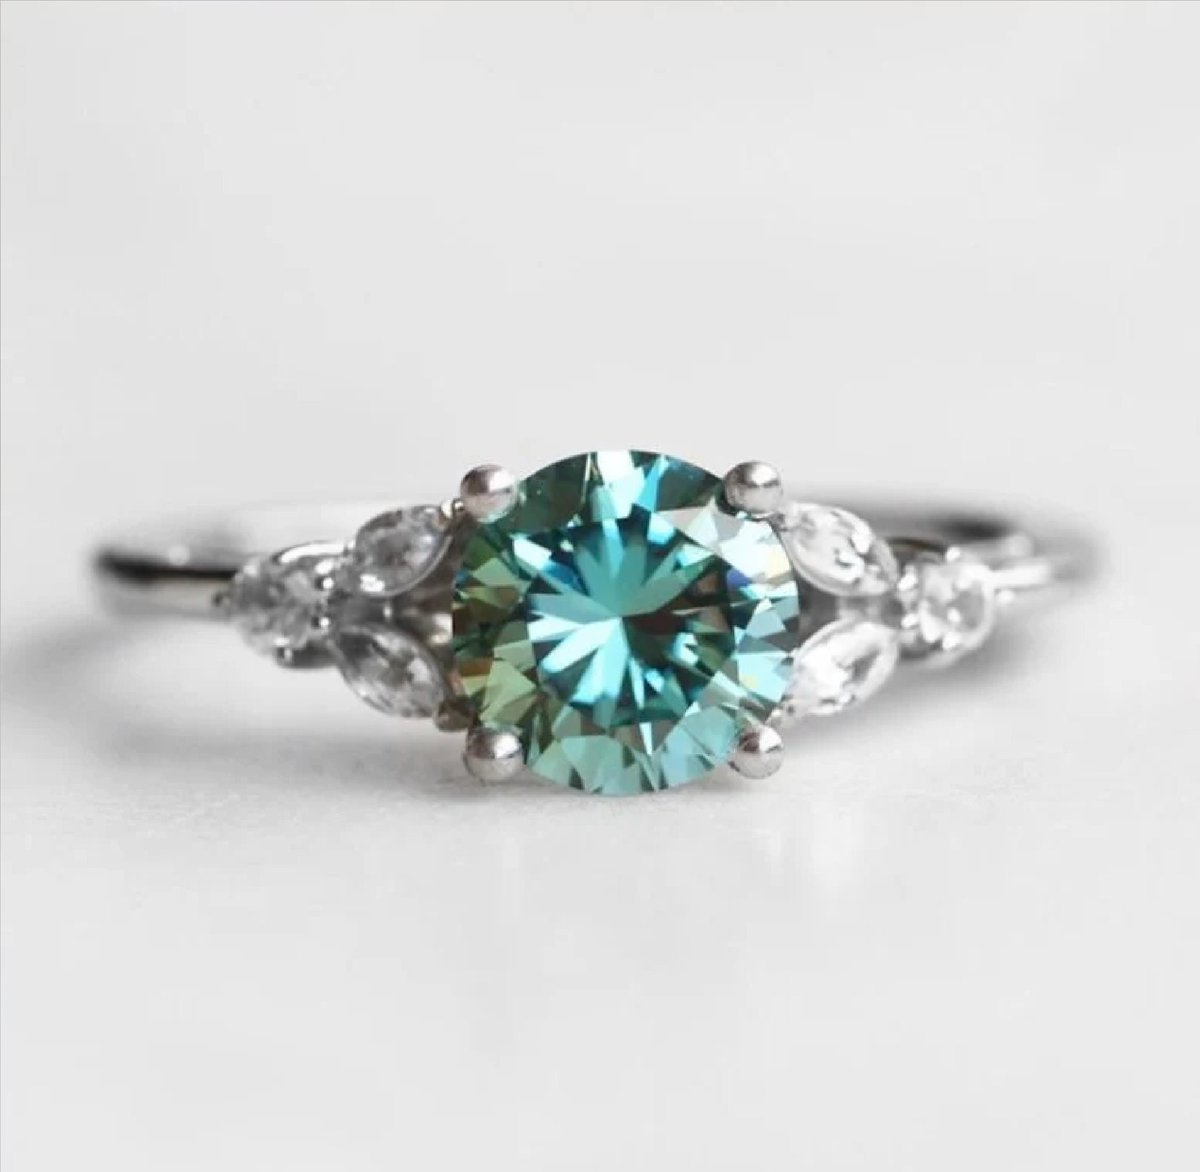 Excited to share the latest addition to my #etsy shop: Peacock Blue Moissanite Ring, 2.0Ct Round Moissanite Engagement Ring, Anniversary Ring, https://t.co/YxJMEmg3oH #white #no #moissanite #bluegreen #moissanite #bridalring #whitegoldring #giftforher #labdiamond https://t.co/ZjdMwJGNjd